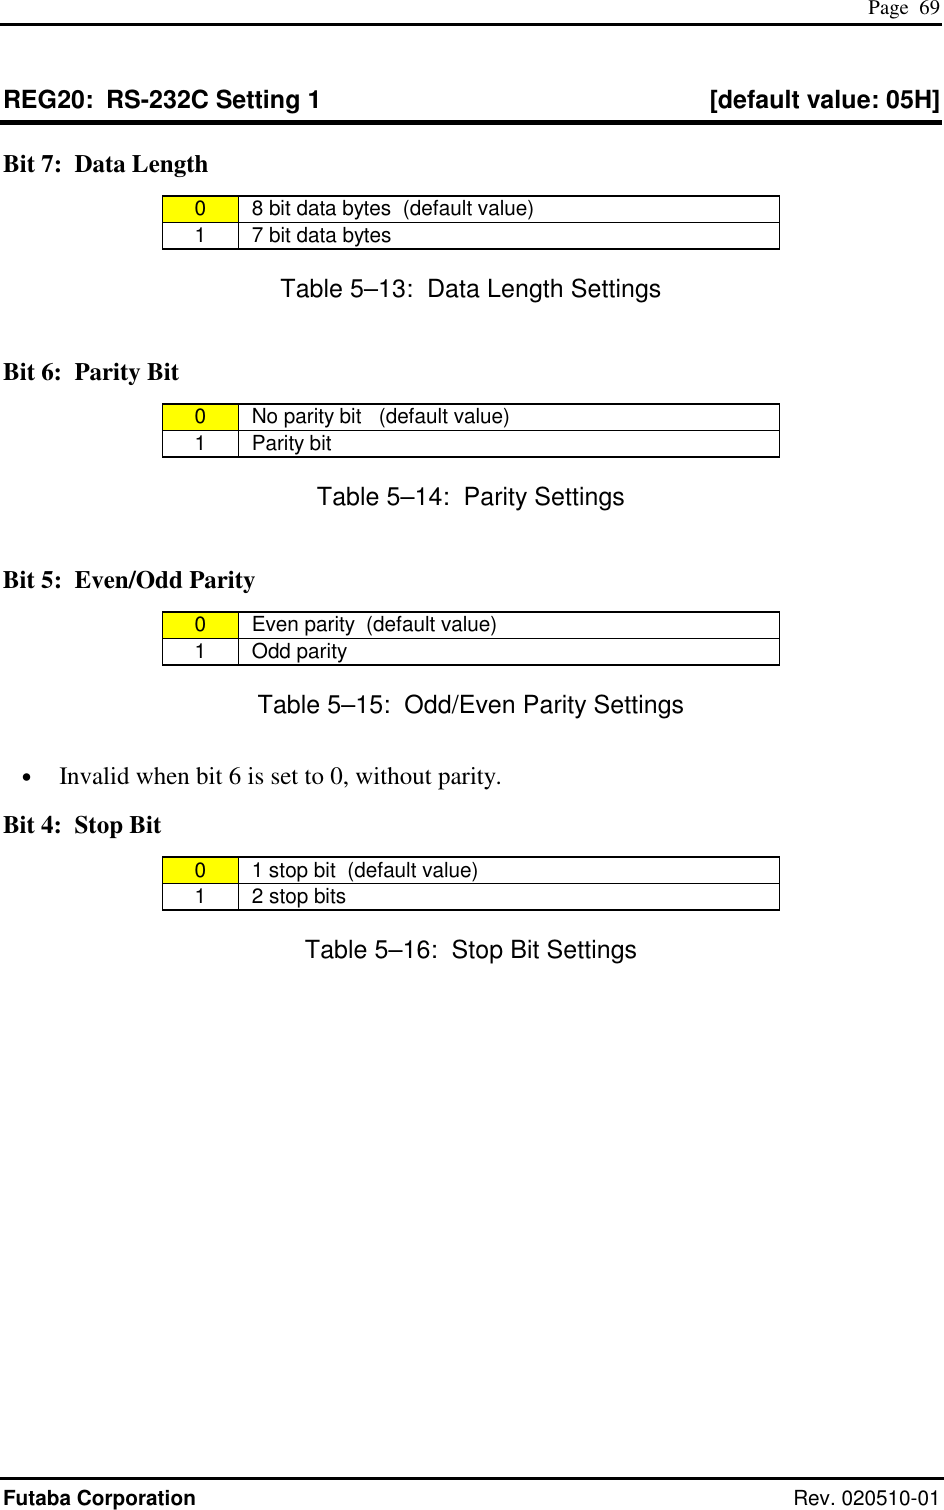  Page  69 Futaba Corporation Rev. 020510-01 REG20:  RS-232C Setting 1  [default value: 05H] Bit 7:  Data Length 0   8 bit data bytes  (default value) 1   7 bit data bytes Table 5–13:  Data Length Settings Bit 6:  Parity Bit 0   No parity bit   (default value) 1  Parity bit Table 5–14:  Parity Settings Bit 5:  Even/Odd Parity 0   Even parity  (default value) 1  Odd parity Table 5–15:  Odd/Even Parity Settings •  Invalid when bit 6 is set to 0, without parity. Bit 4:  Stop Bit 0   1 stop bit  (default value) 1   2 stop bits Table 5–16:  Stop Bit Settings 